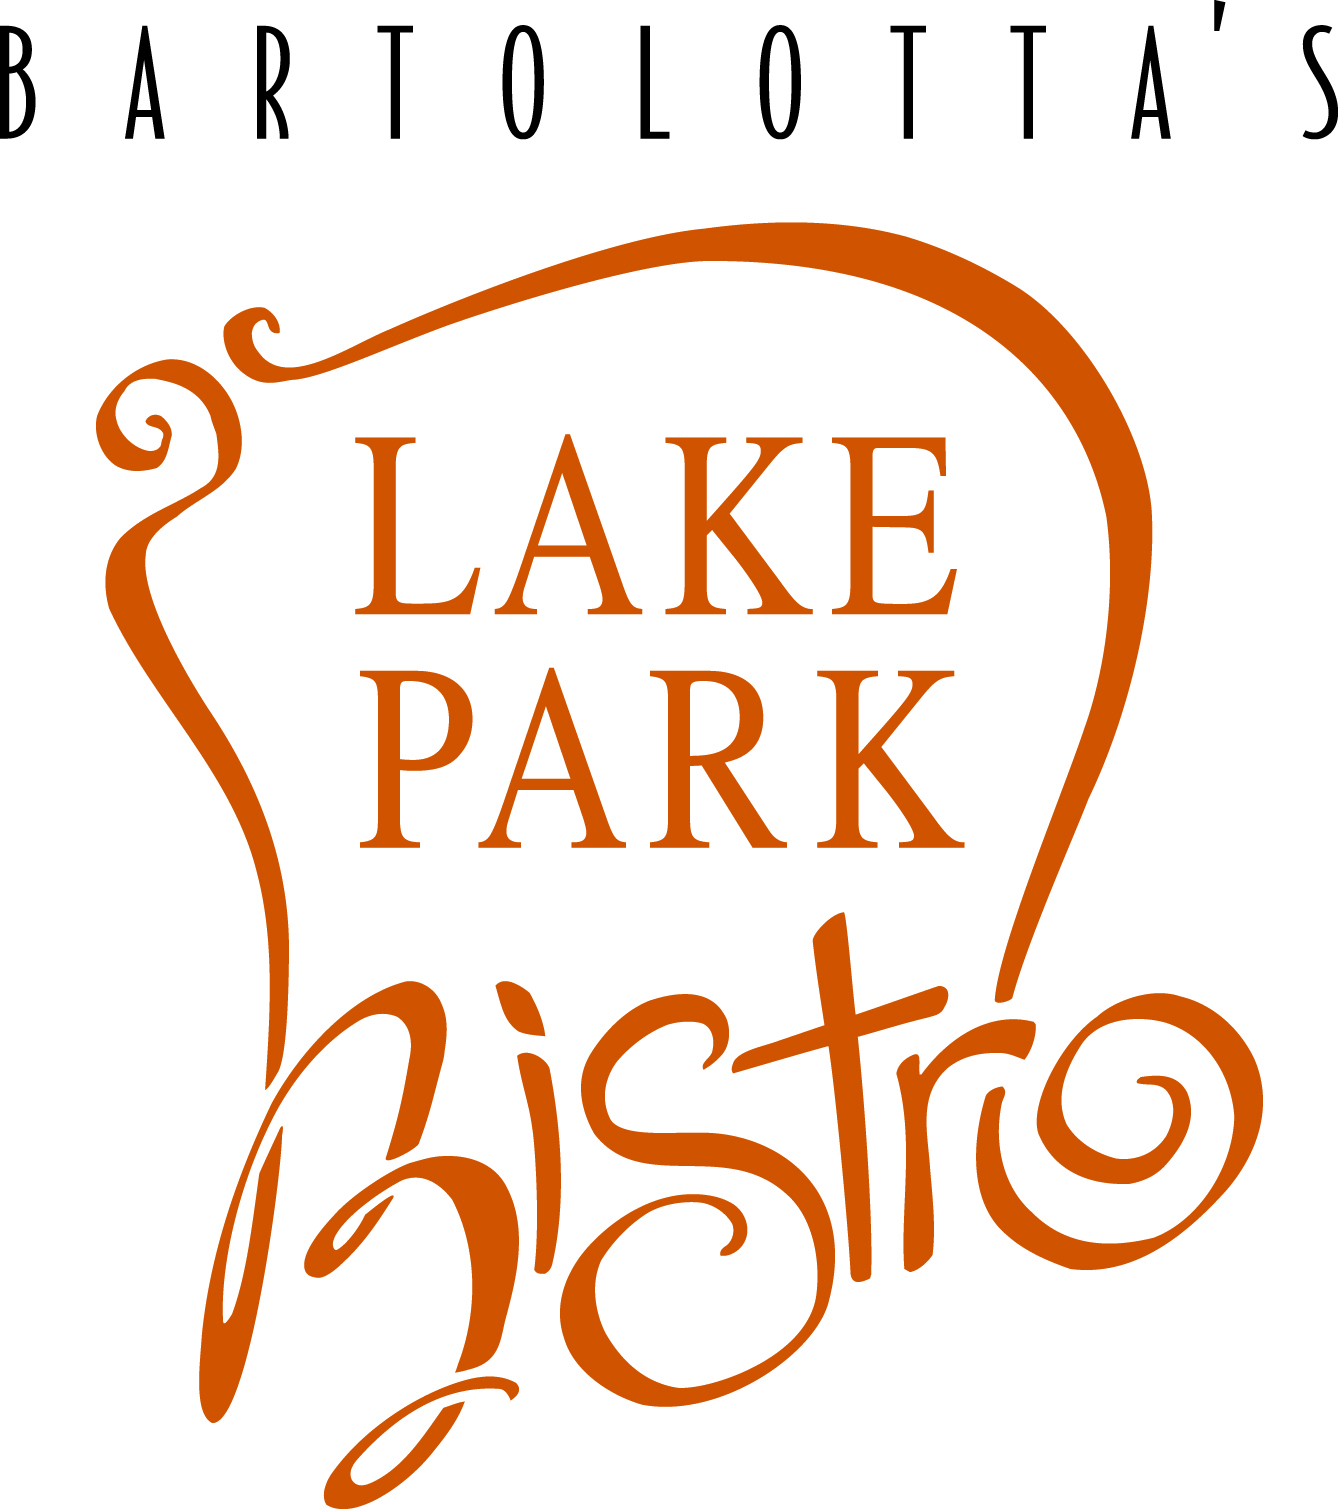 BARTOLOTTA's LAKE PARK Bistro